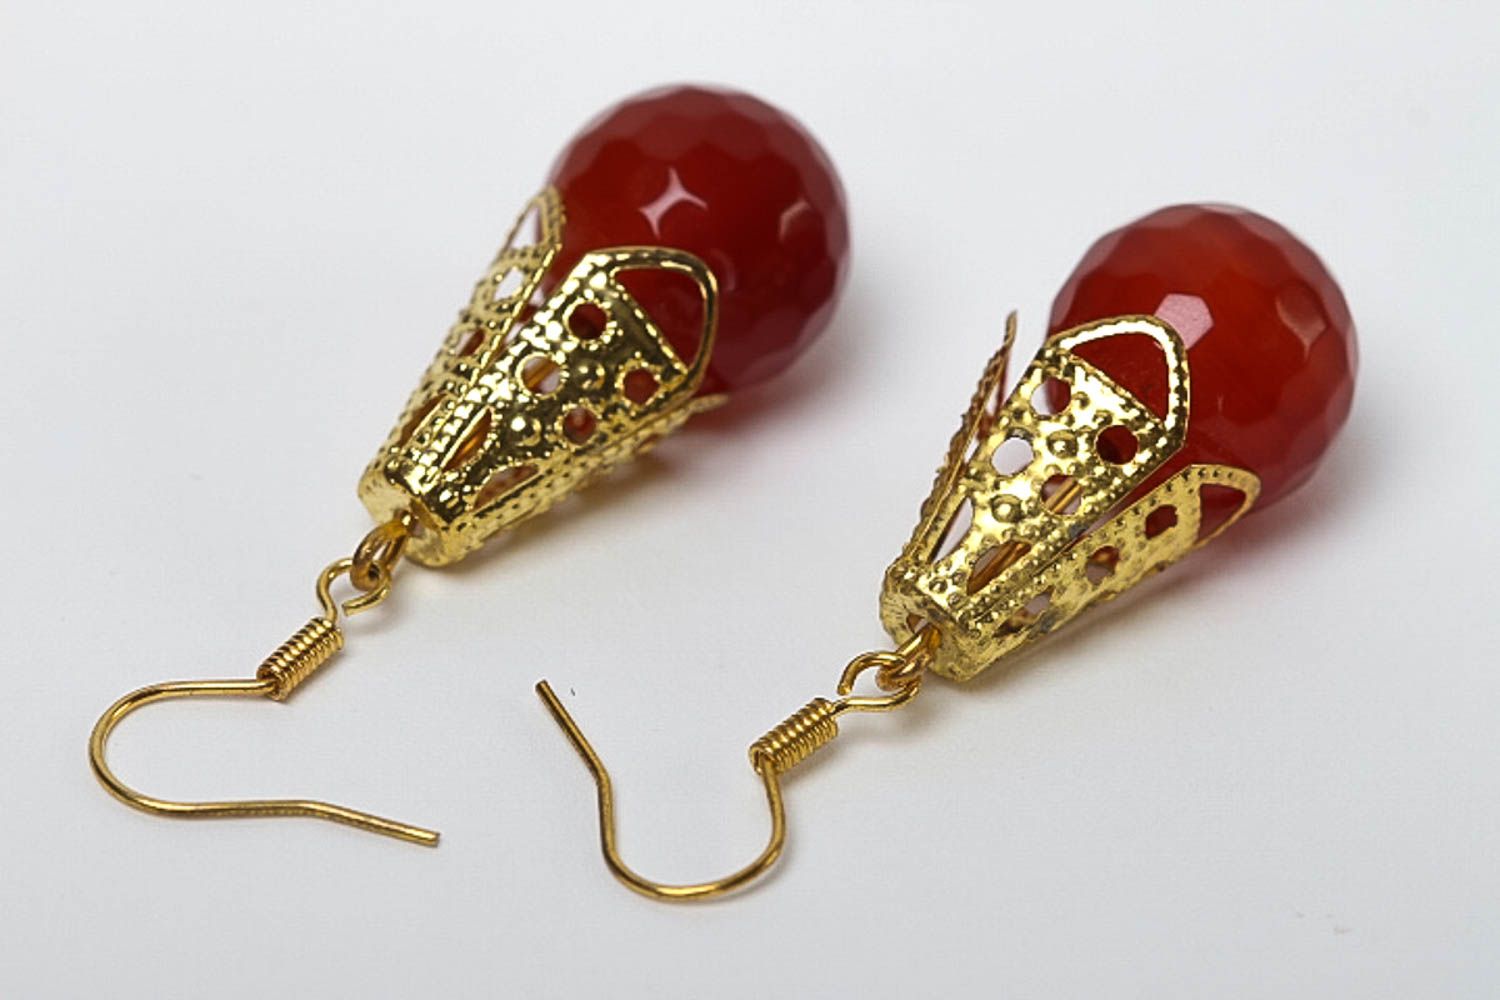 Handmade earrings with cornelian beads earrings with charms designer jewelry photo 4